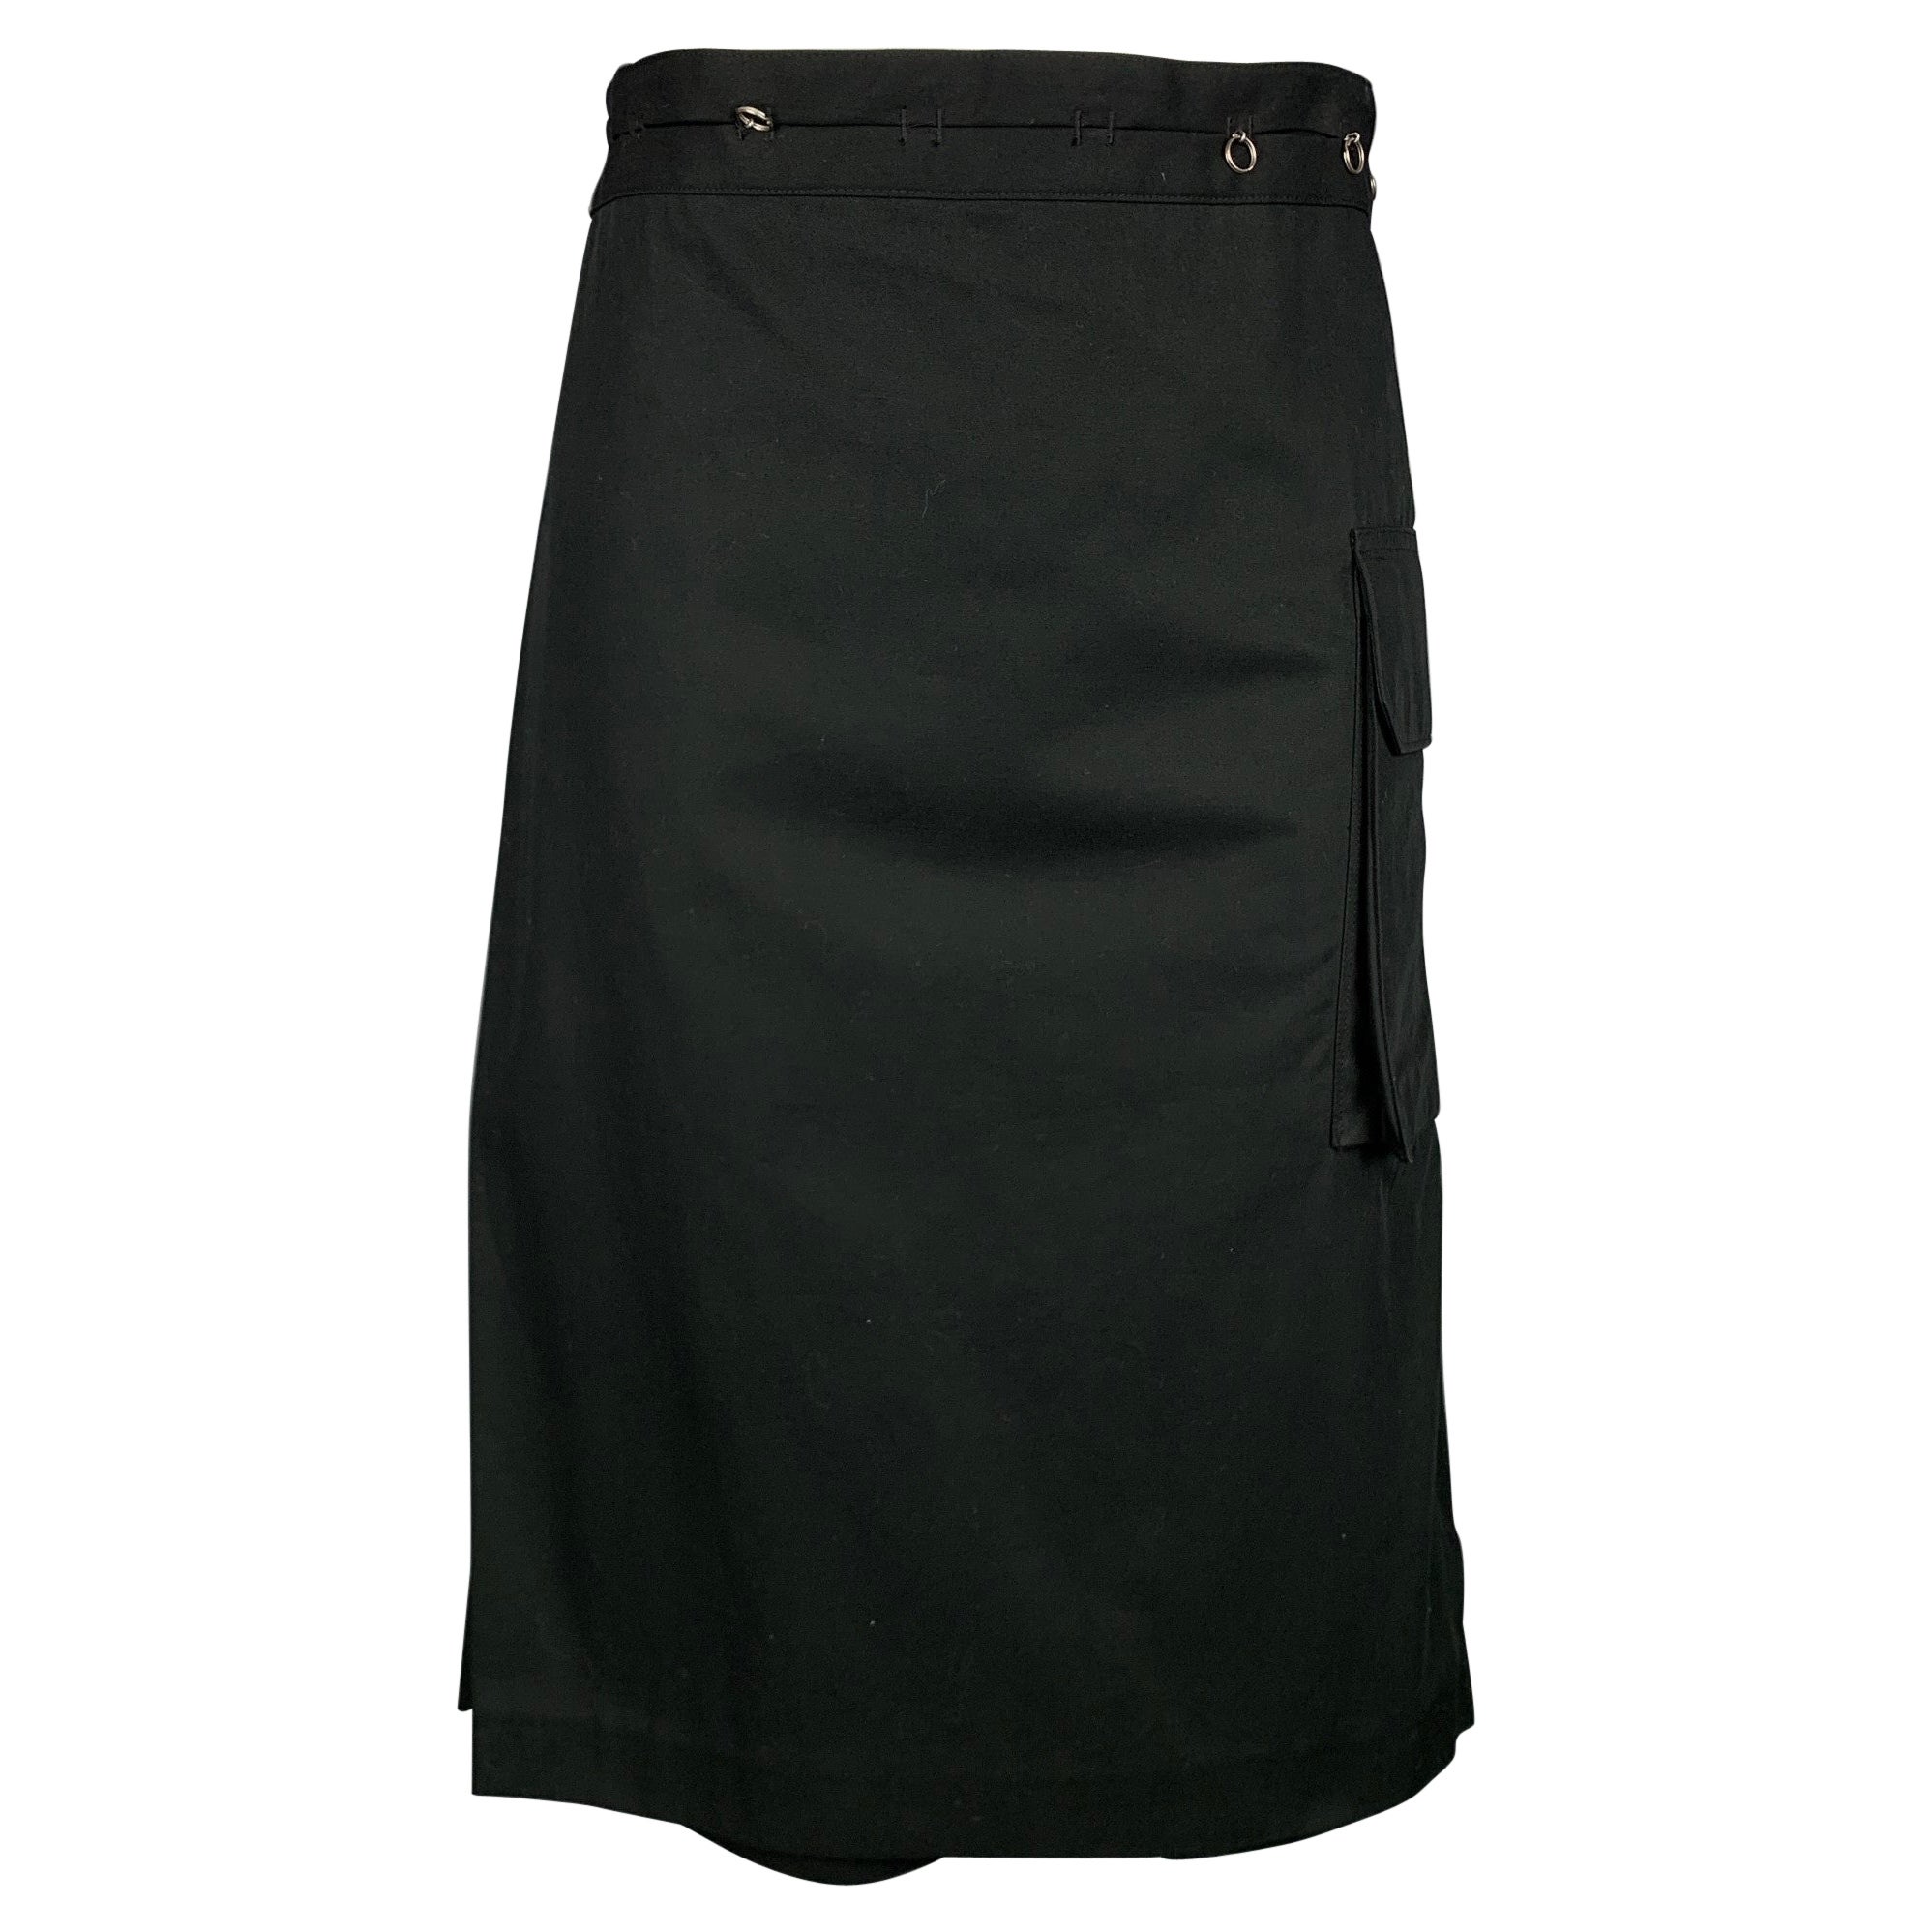 JEAN PAUL GAULTIER FEMME Size 8 Black Twill Cotton Skirt Panel Shorts